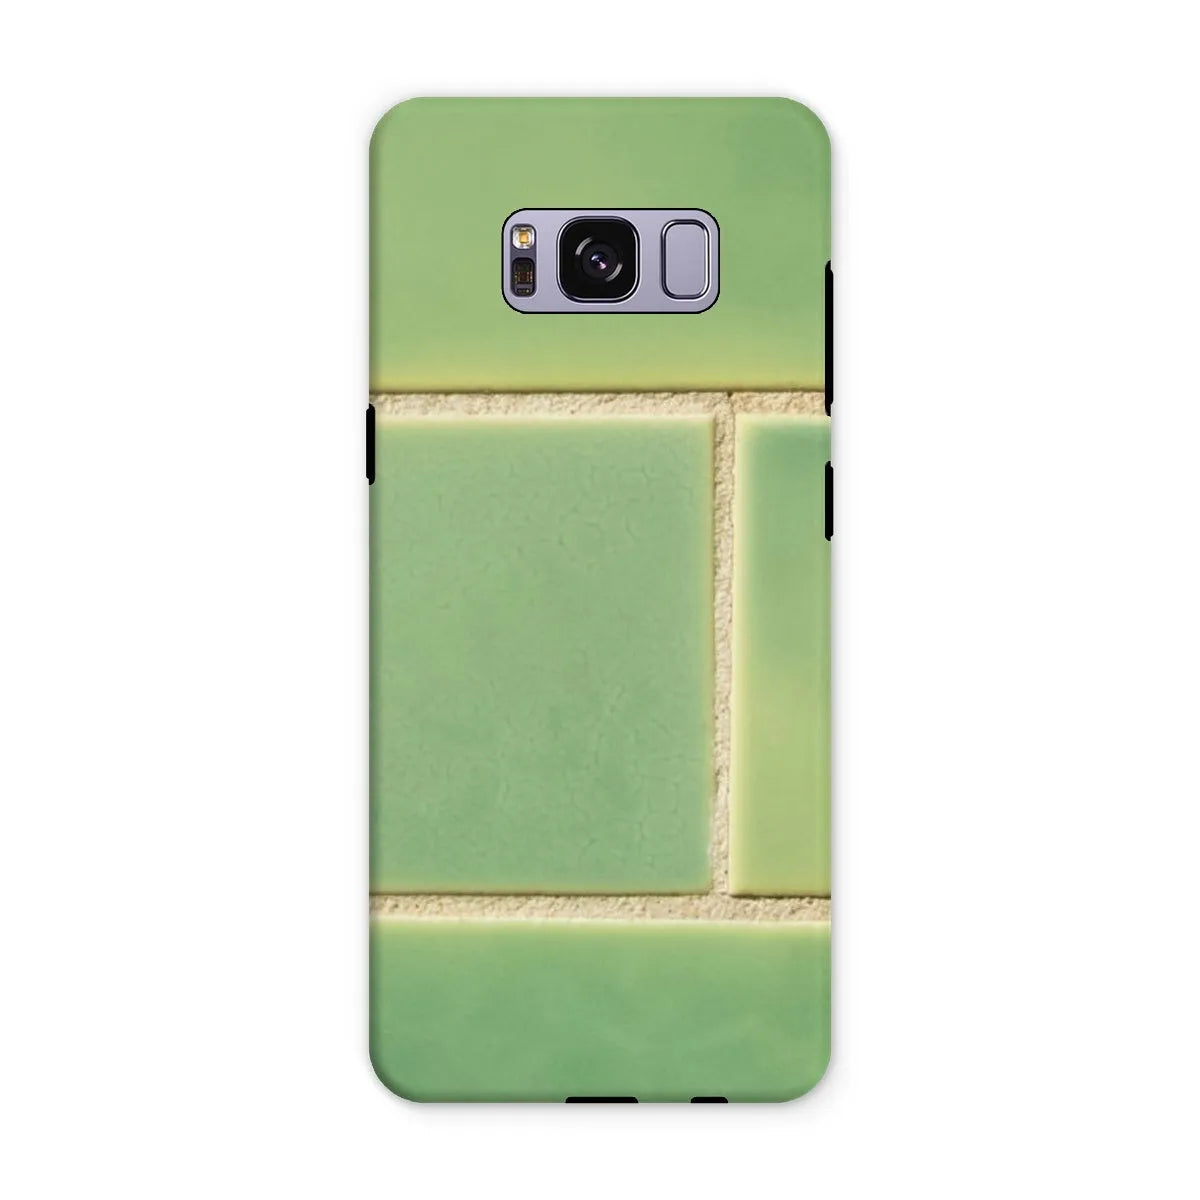 Emerald City Tough Phone Case - Samsung Galaxy S8 Plus / Matte - Mobile Phone Cases - Aesthetic Art